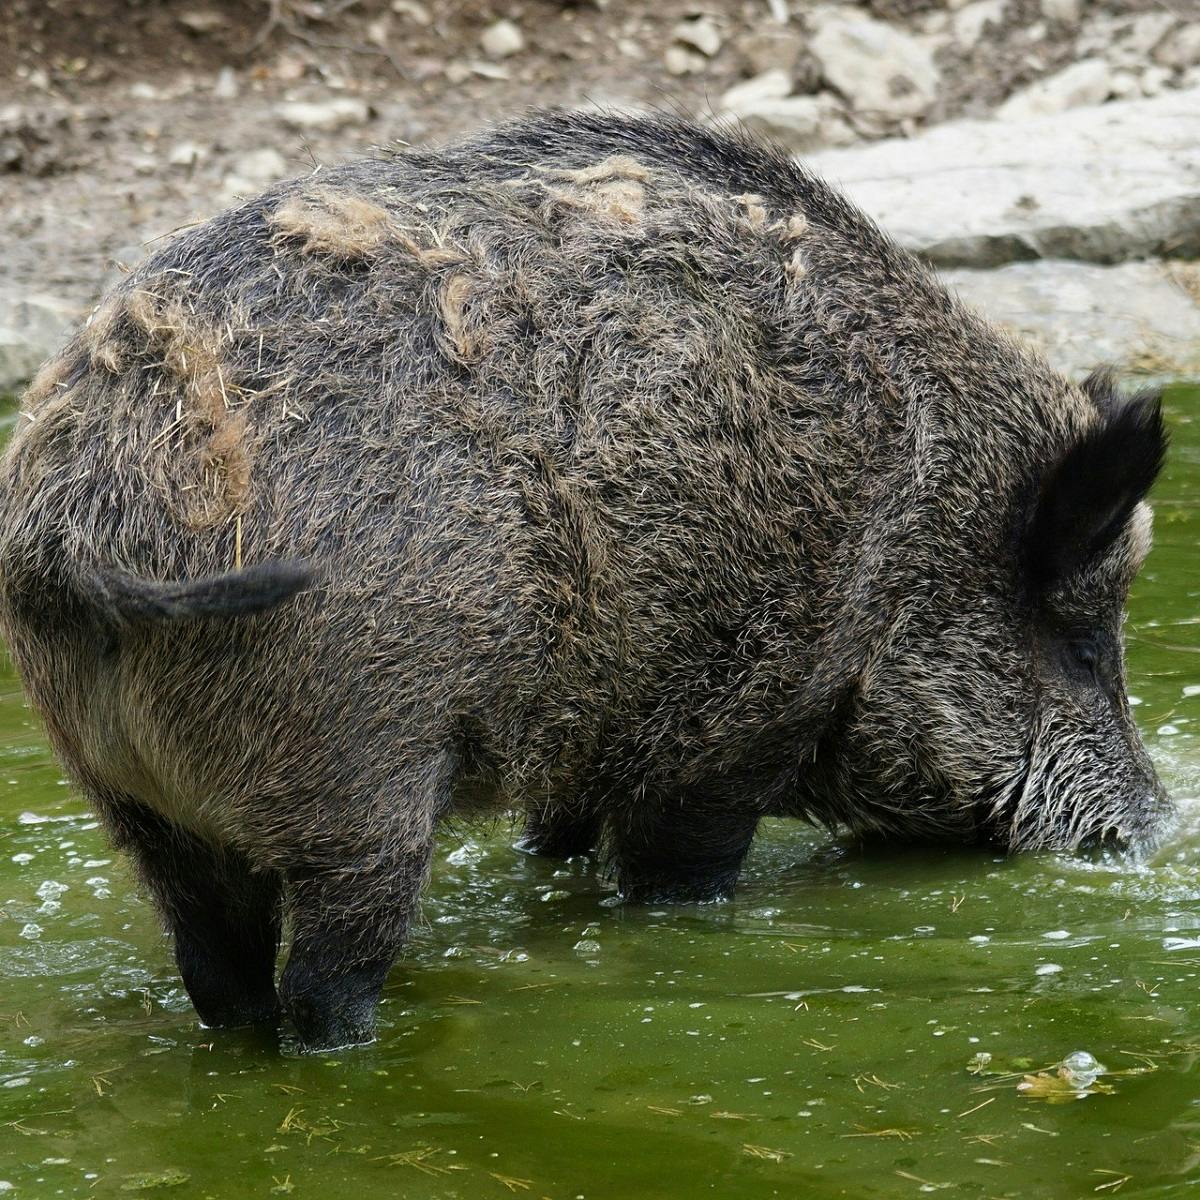 A large black wild boar in a watering hole